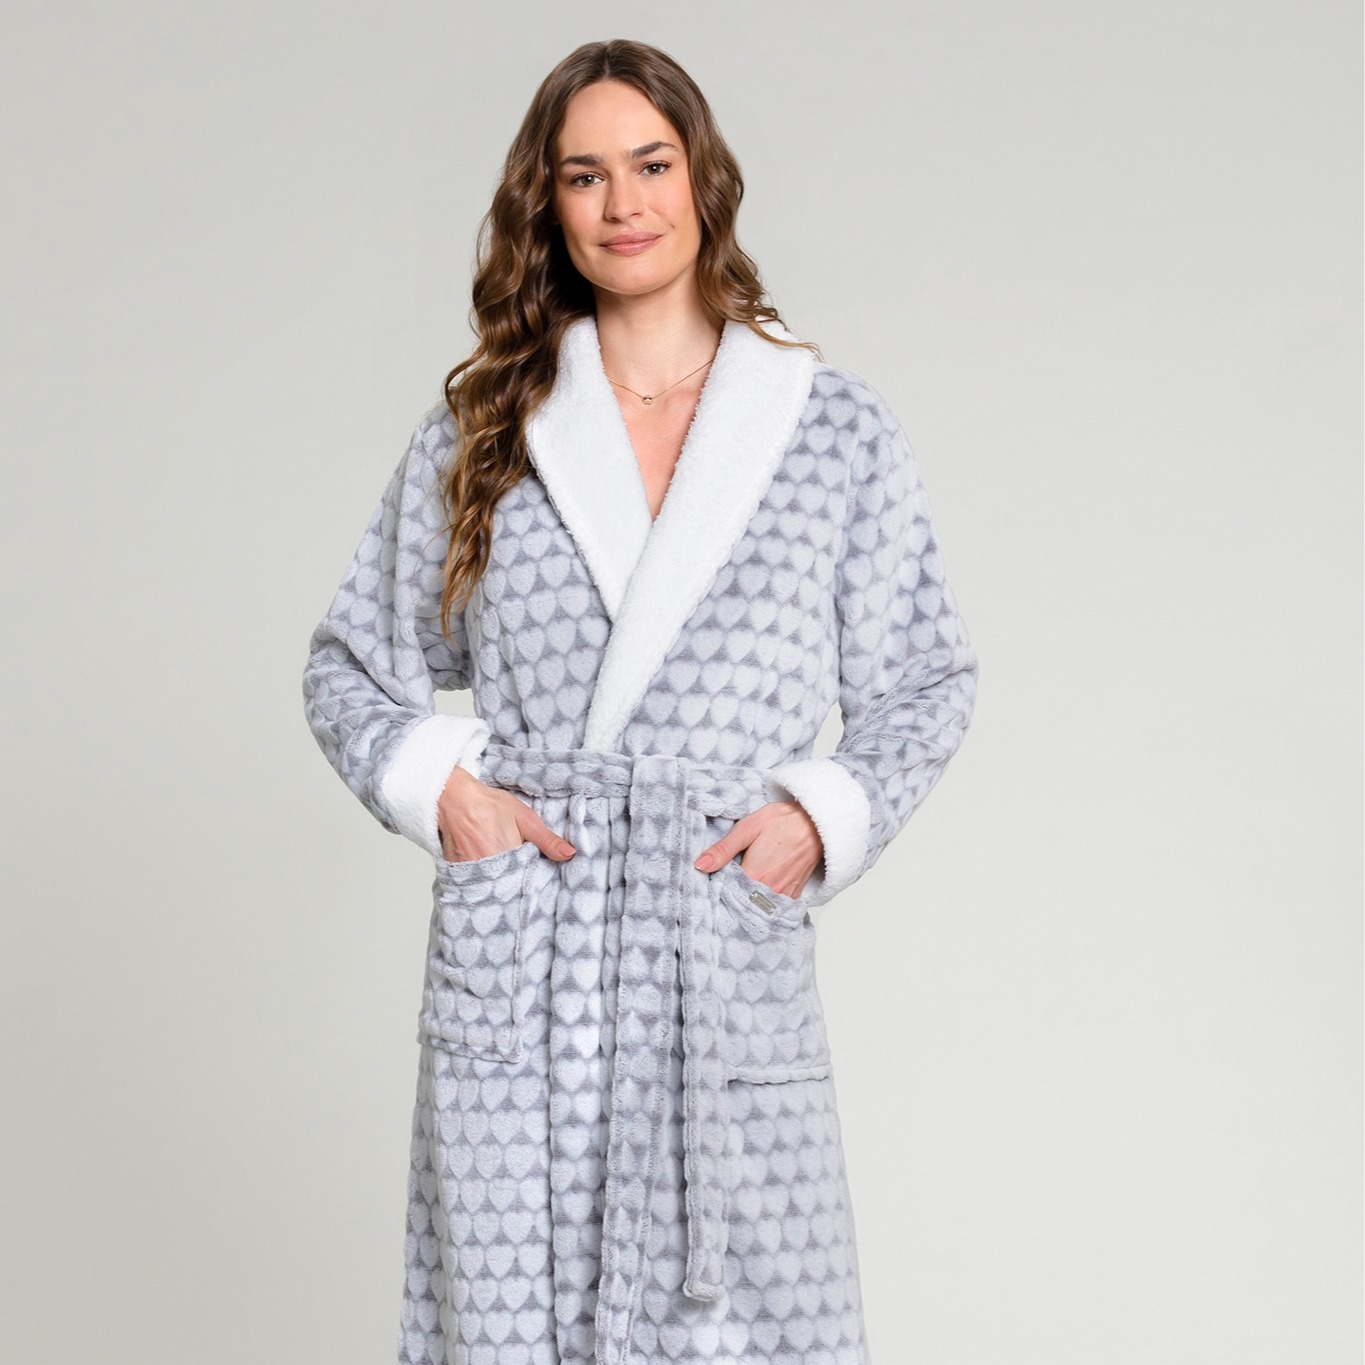 Pijama de flanela gola bordado inglês, €0.00